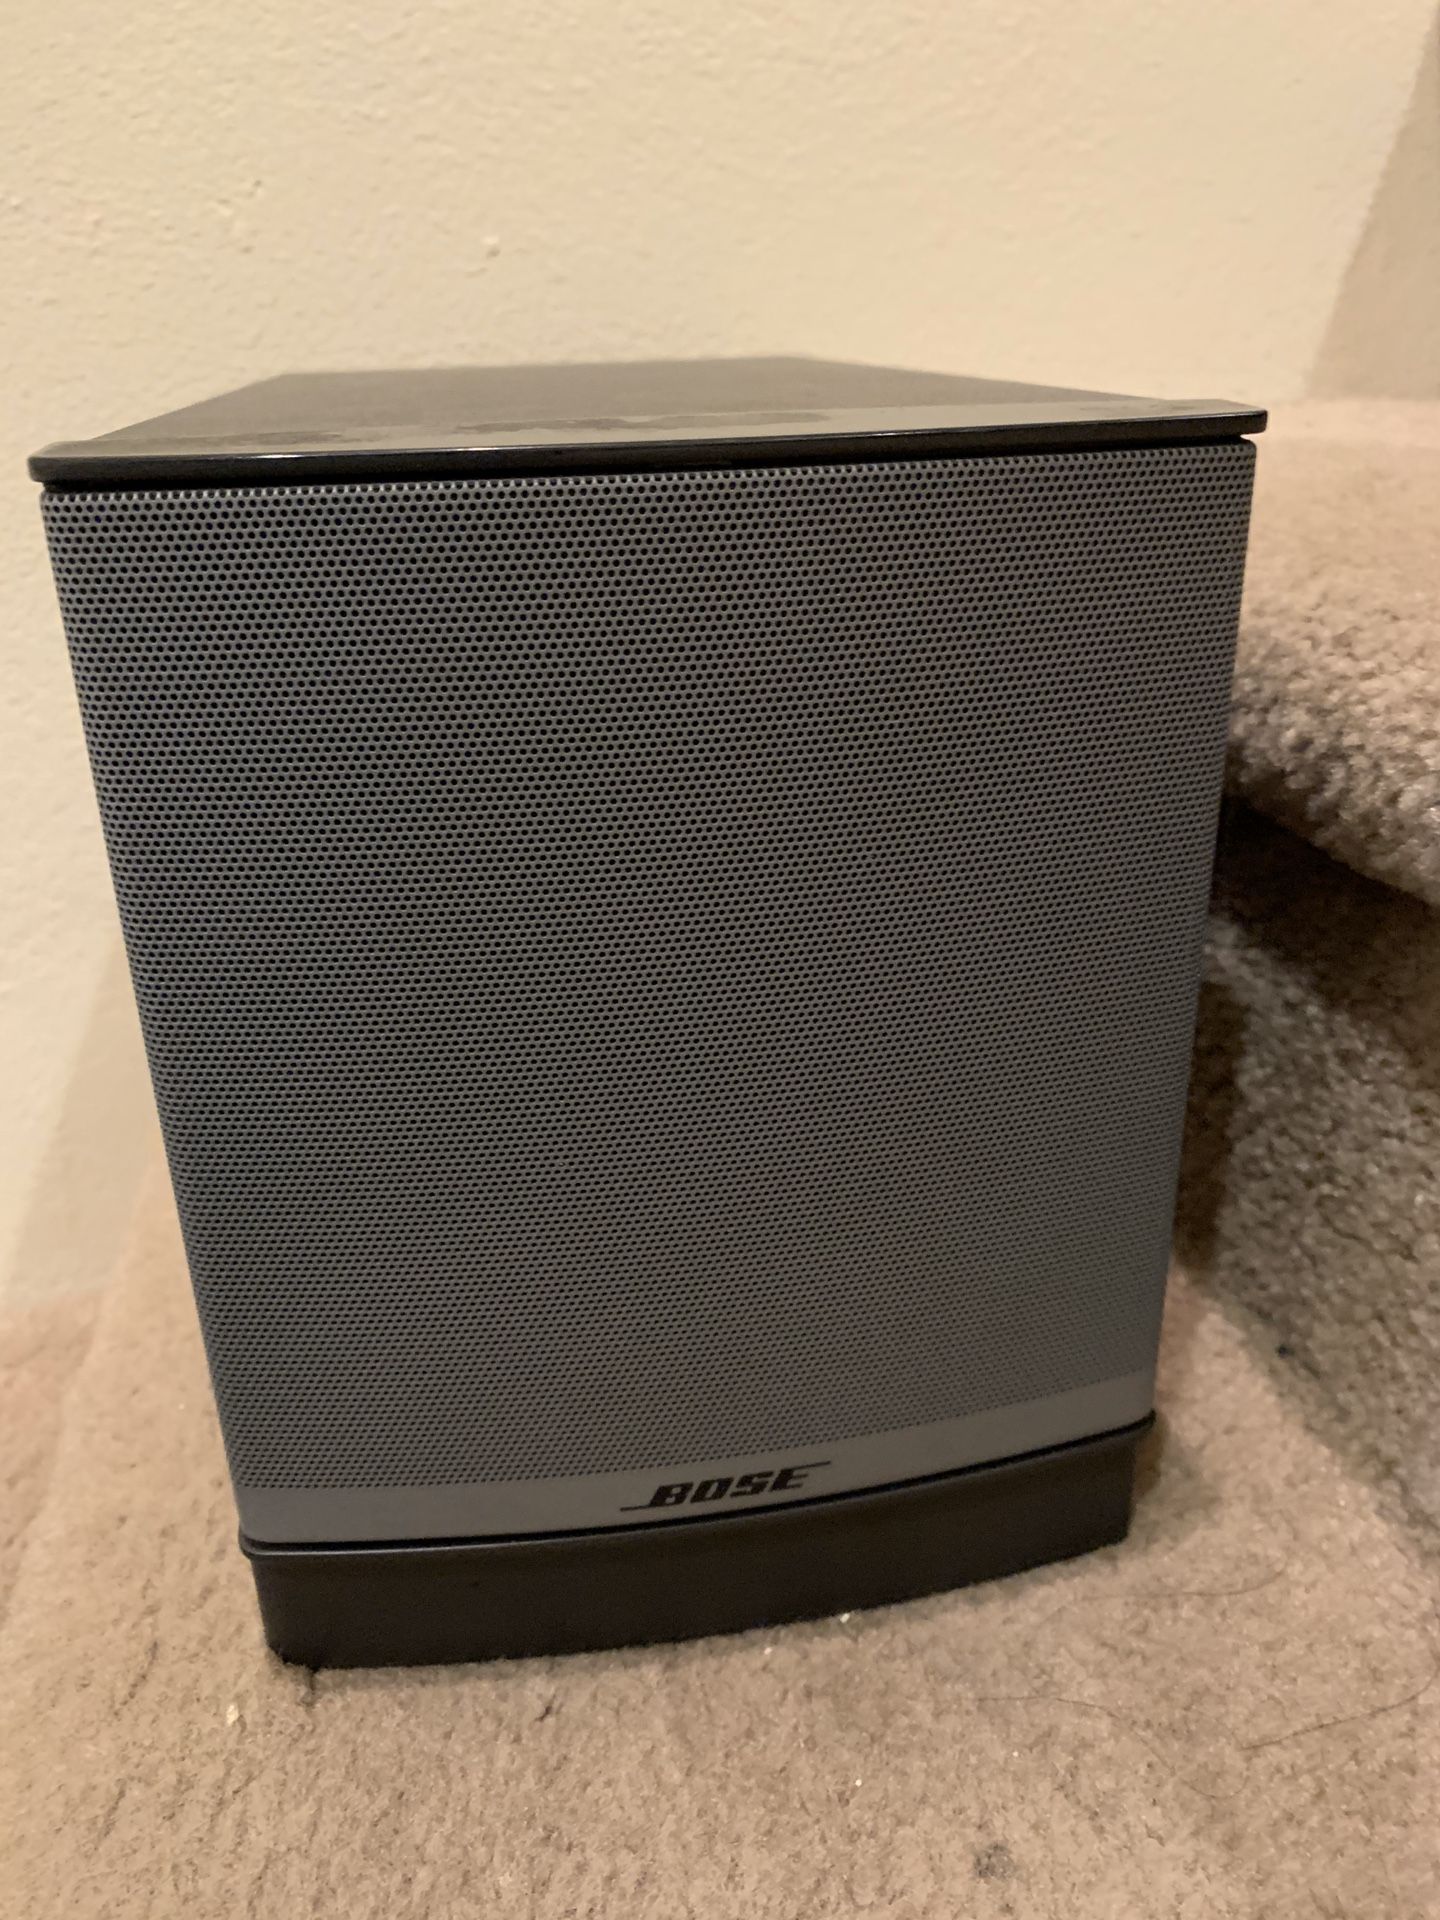 Bose multi media speaker system